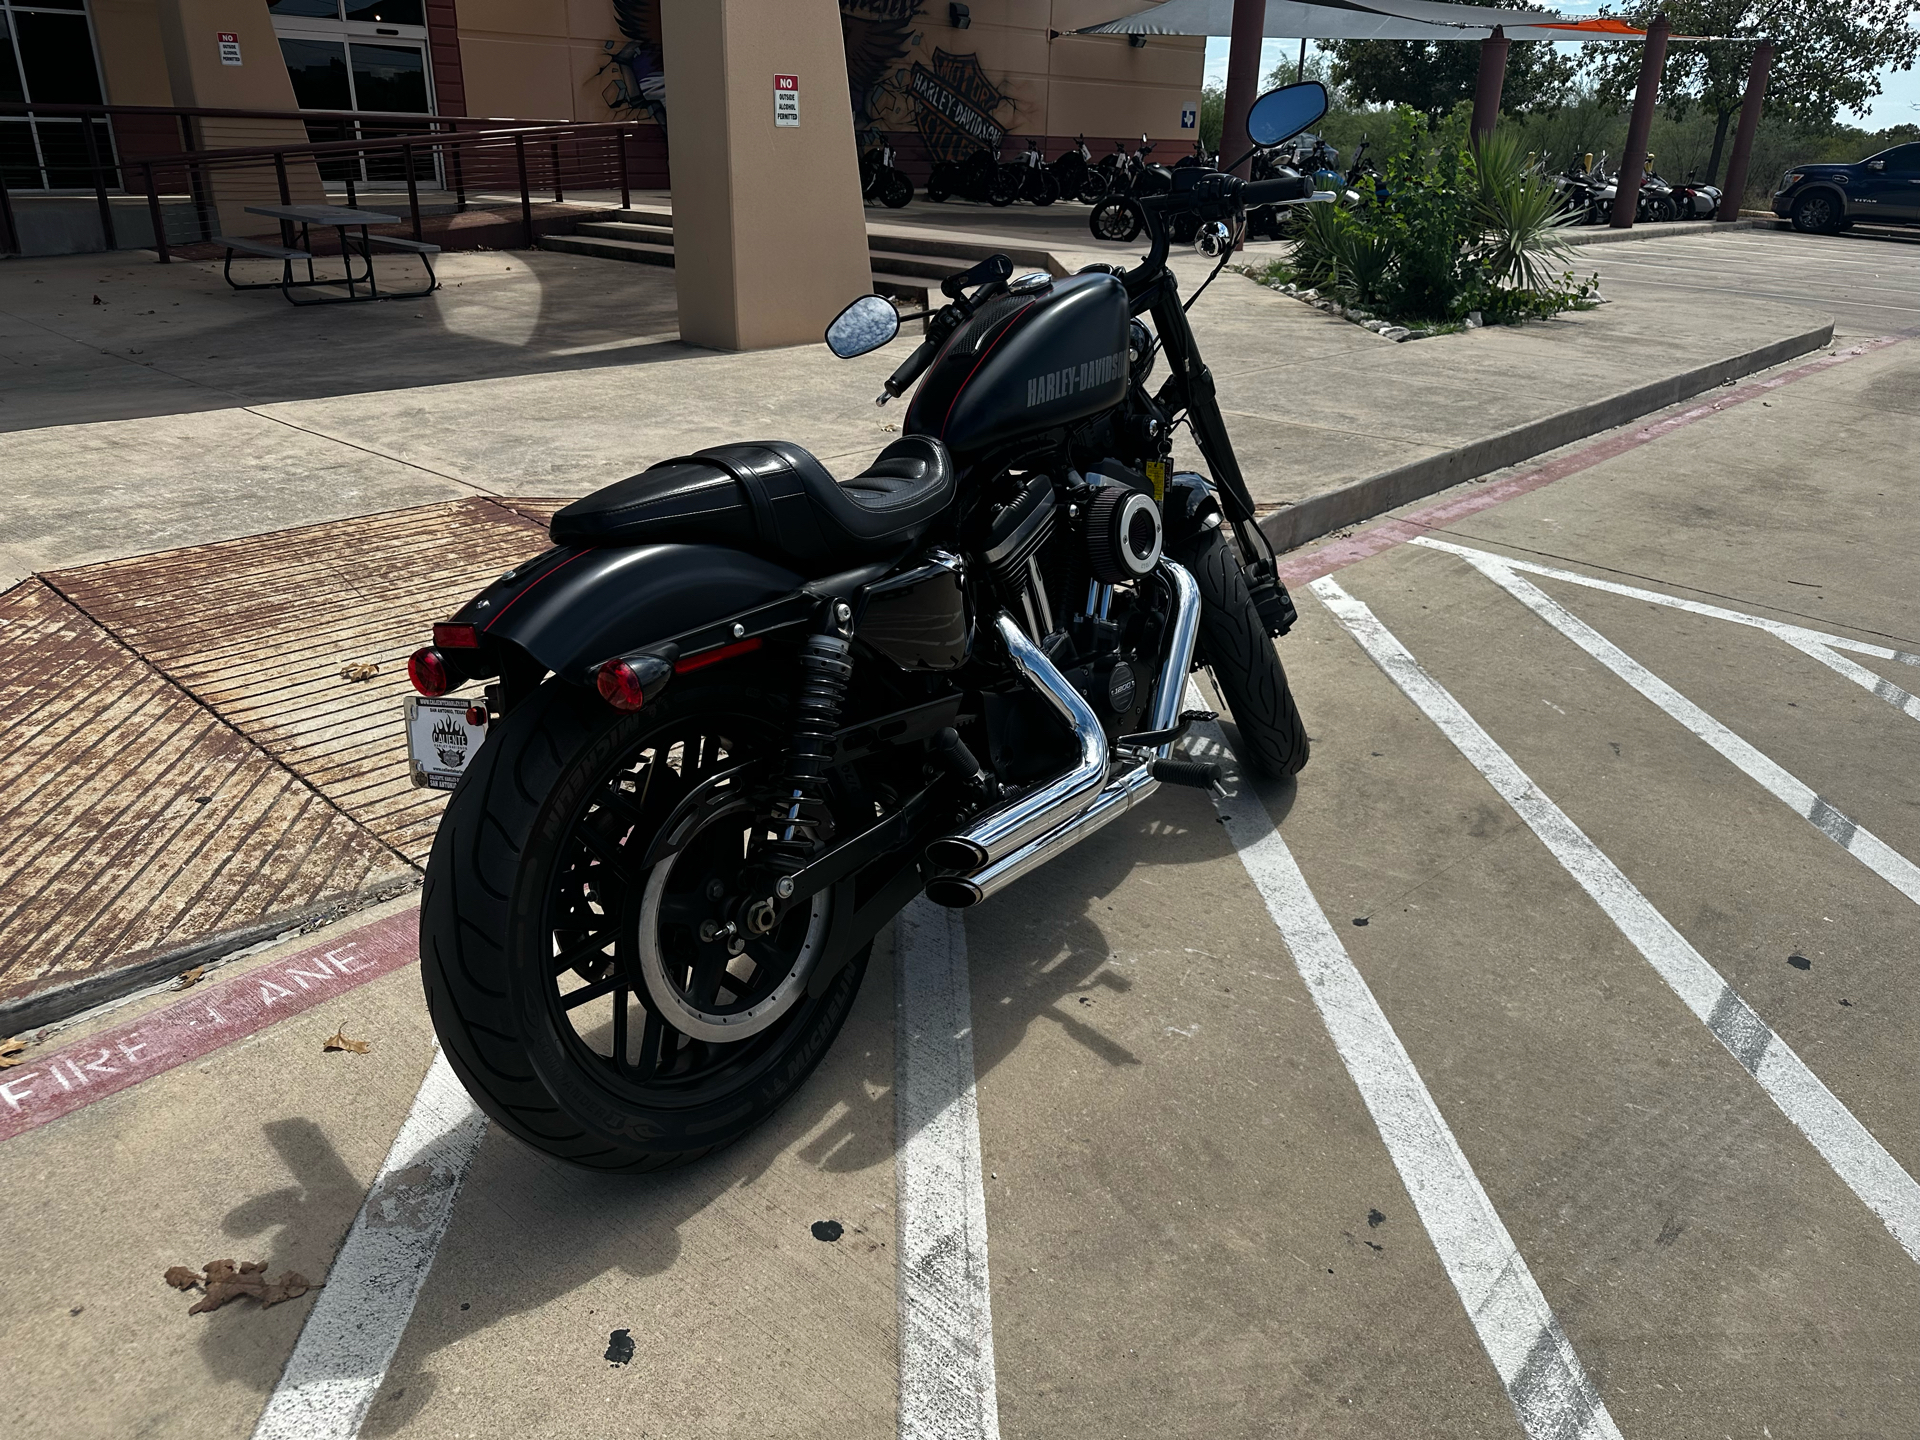 2016 Harley-Davidson Roadster™ in San Antonio, Texas - Photo 8